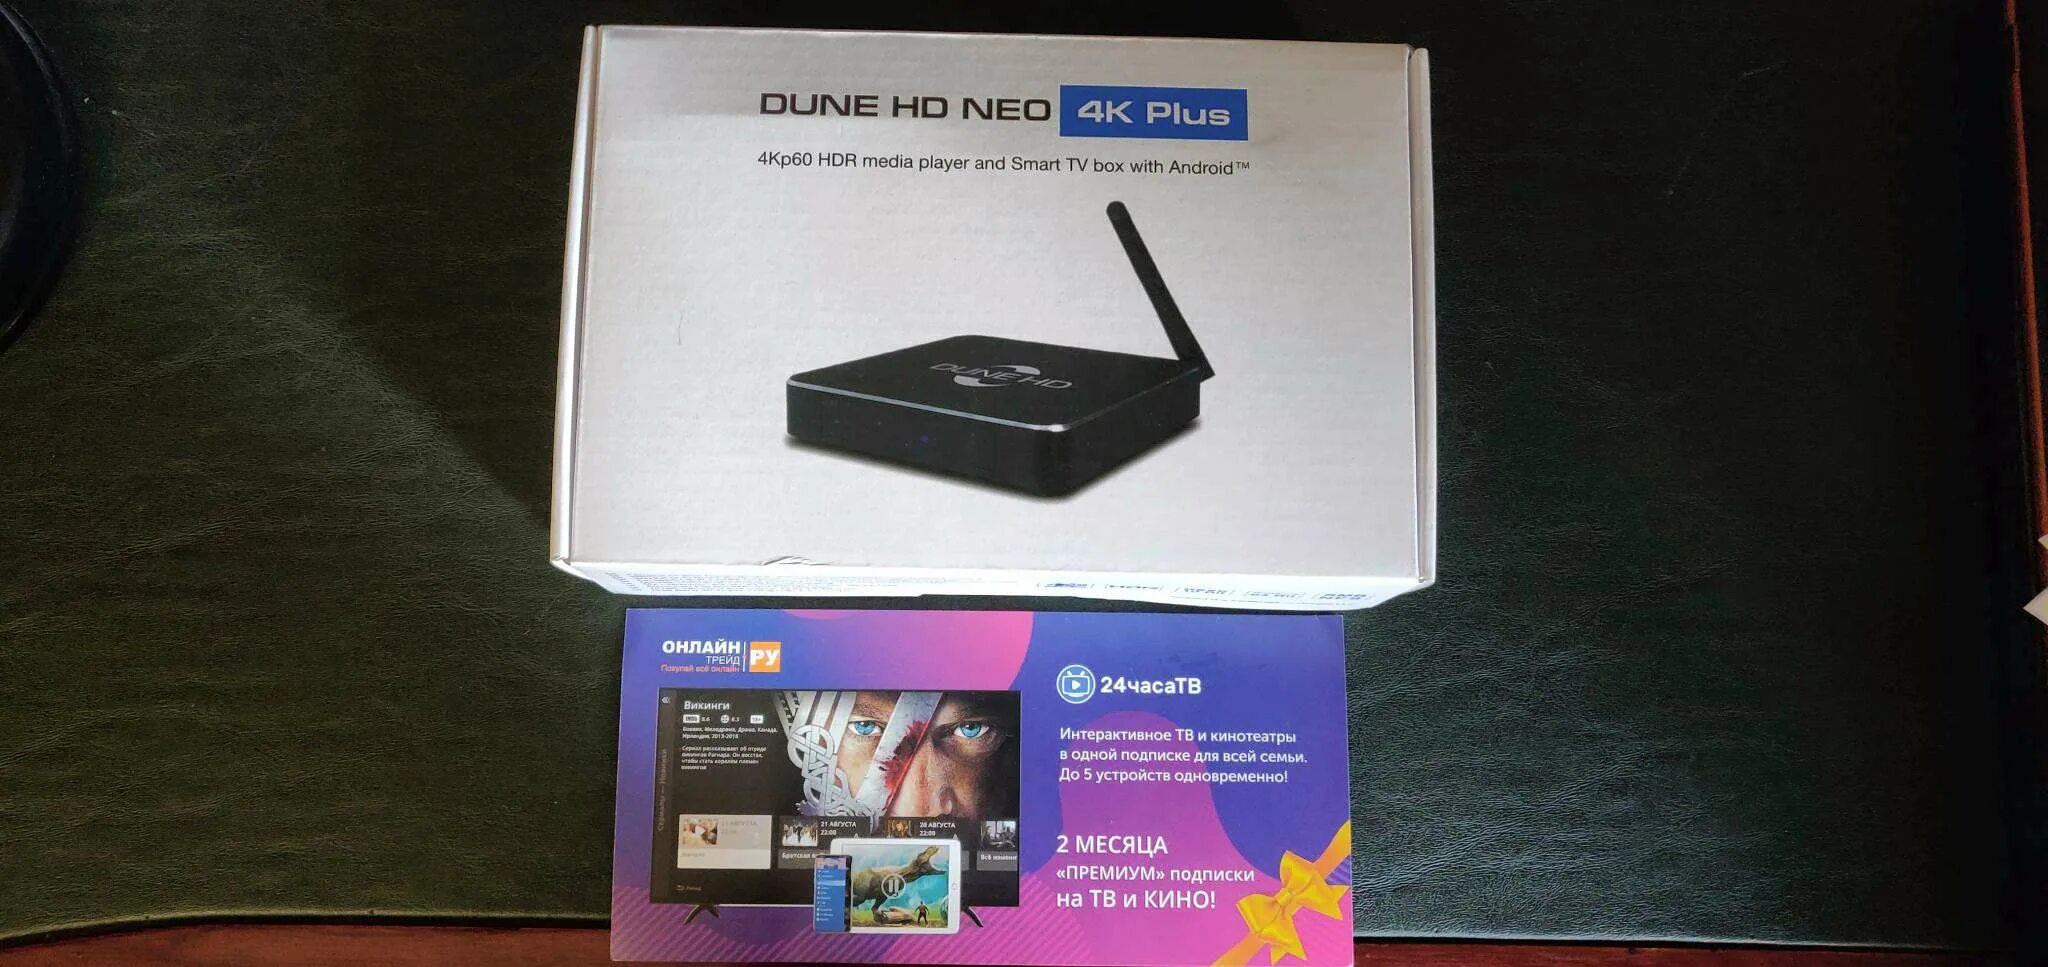 Dune magic plus. Dune Neo 4k Plus. Dune HD Neo 4k Plus. Медиаплеер Dune HD Sky 4k Plus. Dune Smartbox 4k.